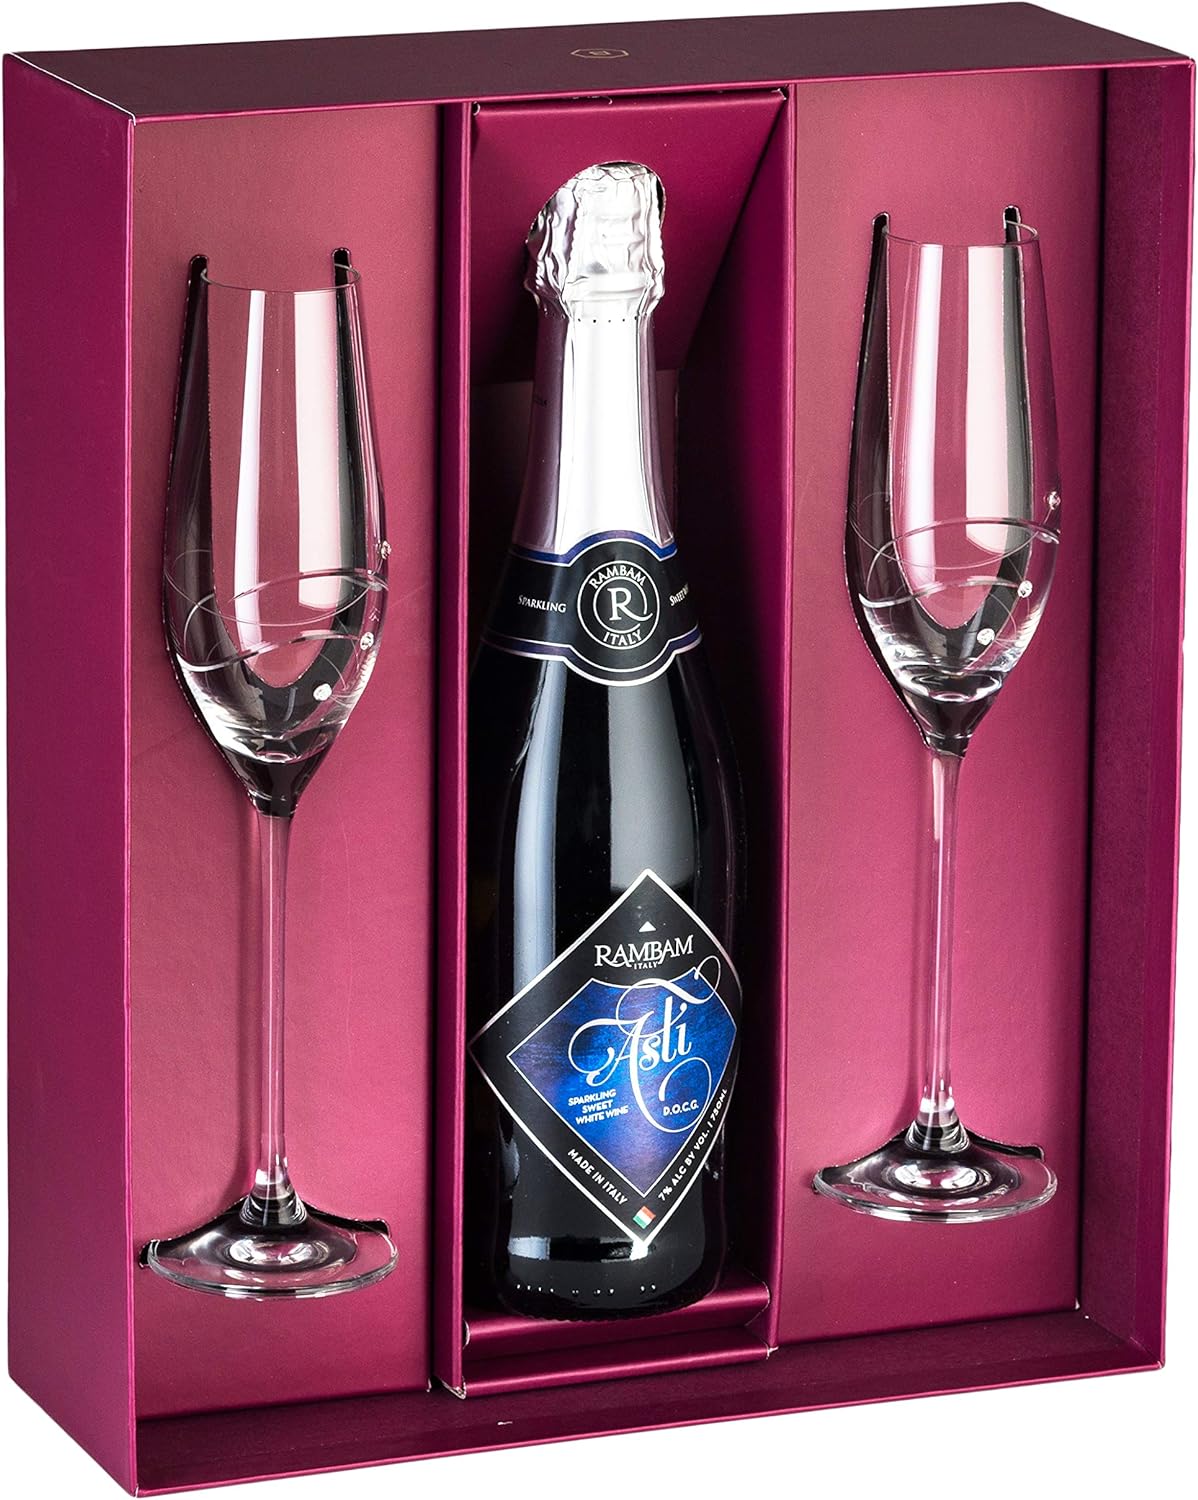 Best Dom Perignon Champagne: Top Picks for Exquisite Tastes